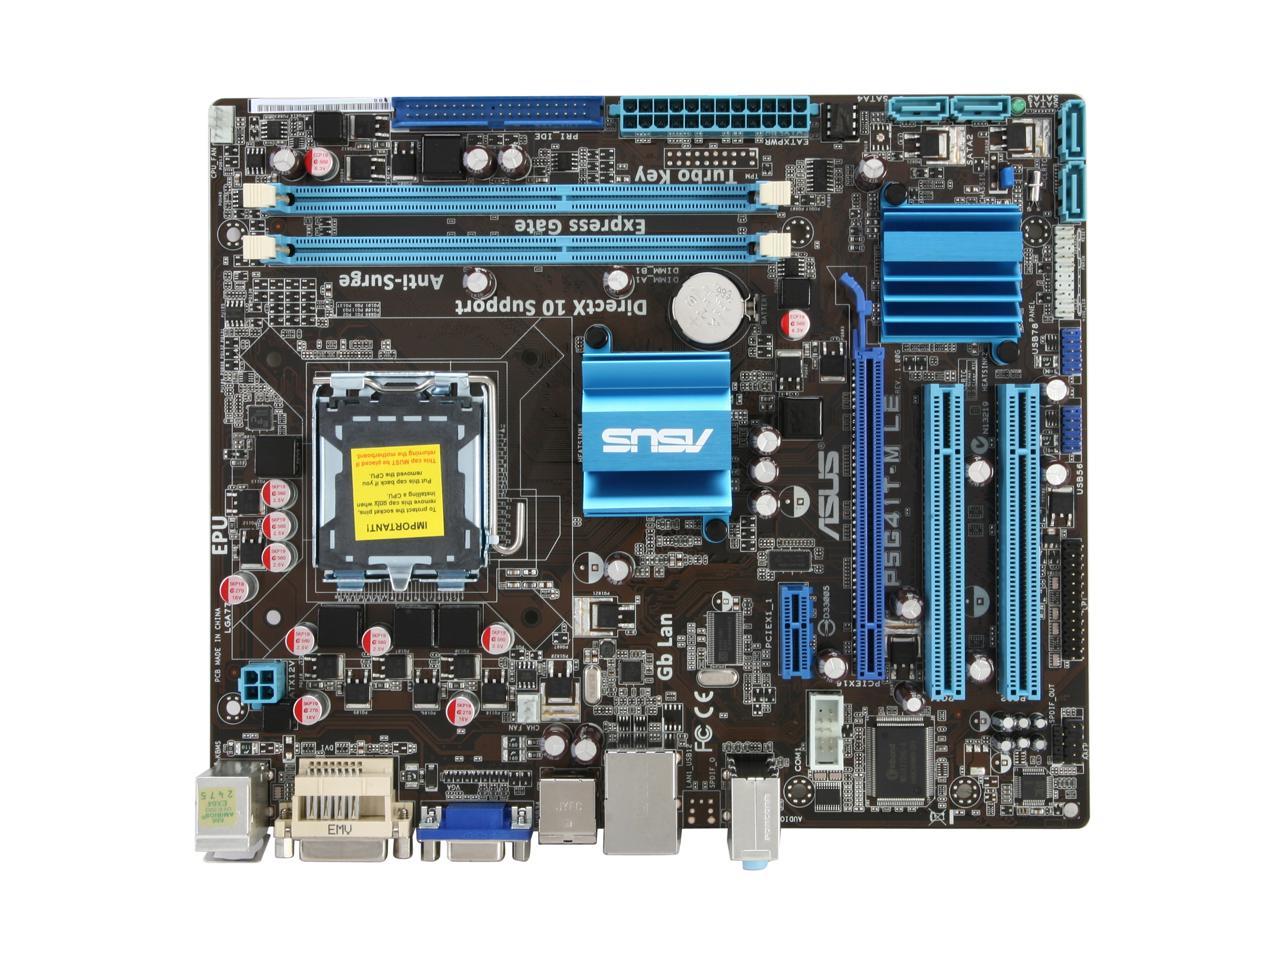 ASUS P5G41T-M LE LGA 775 Micro ATX Intel Motherboard - Newegg.com